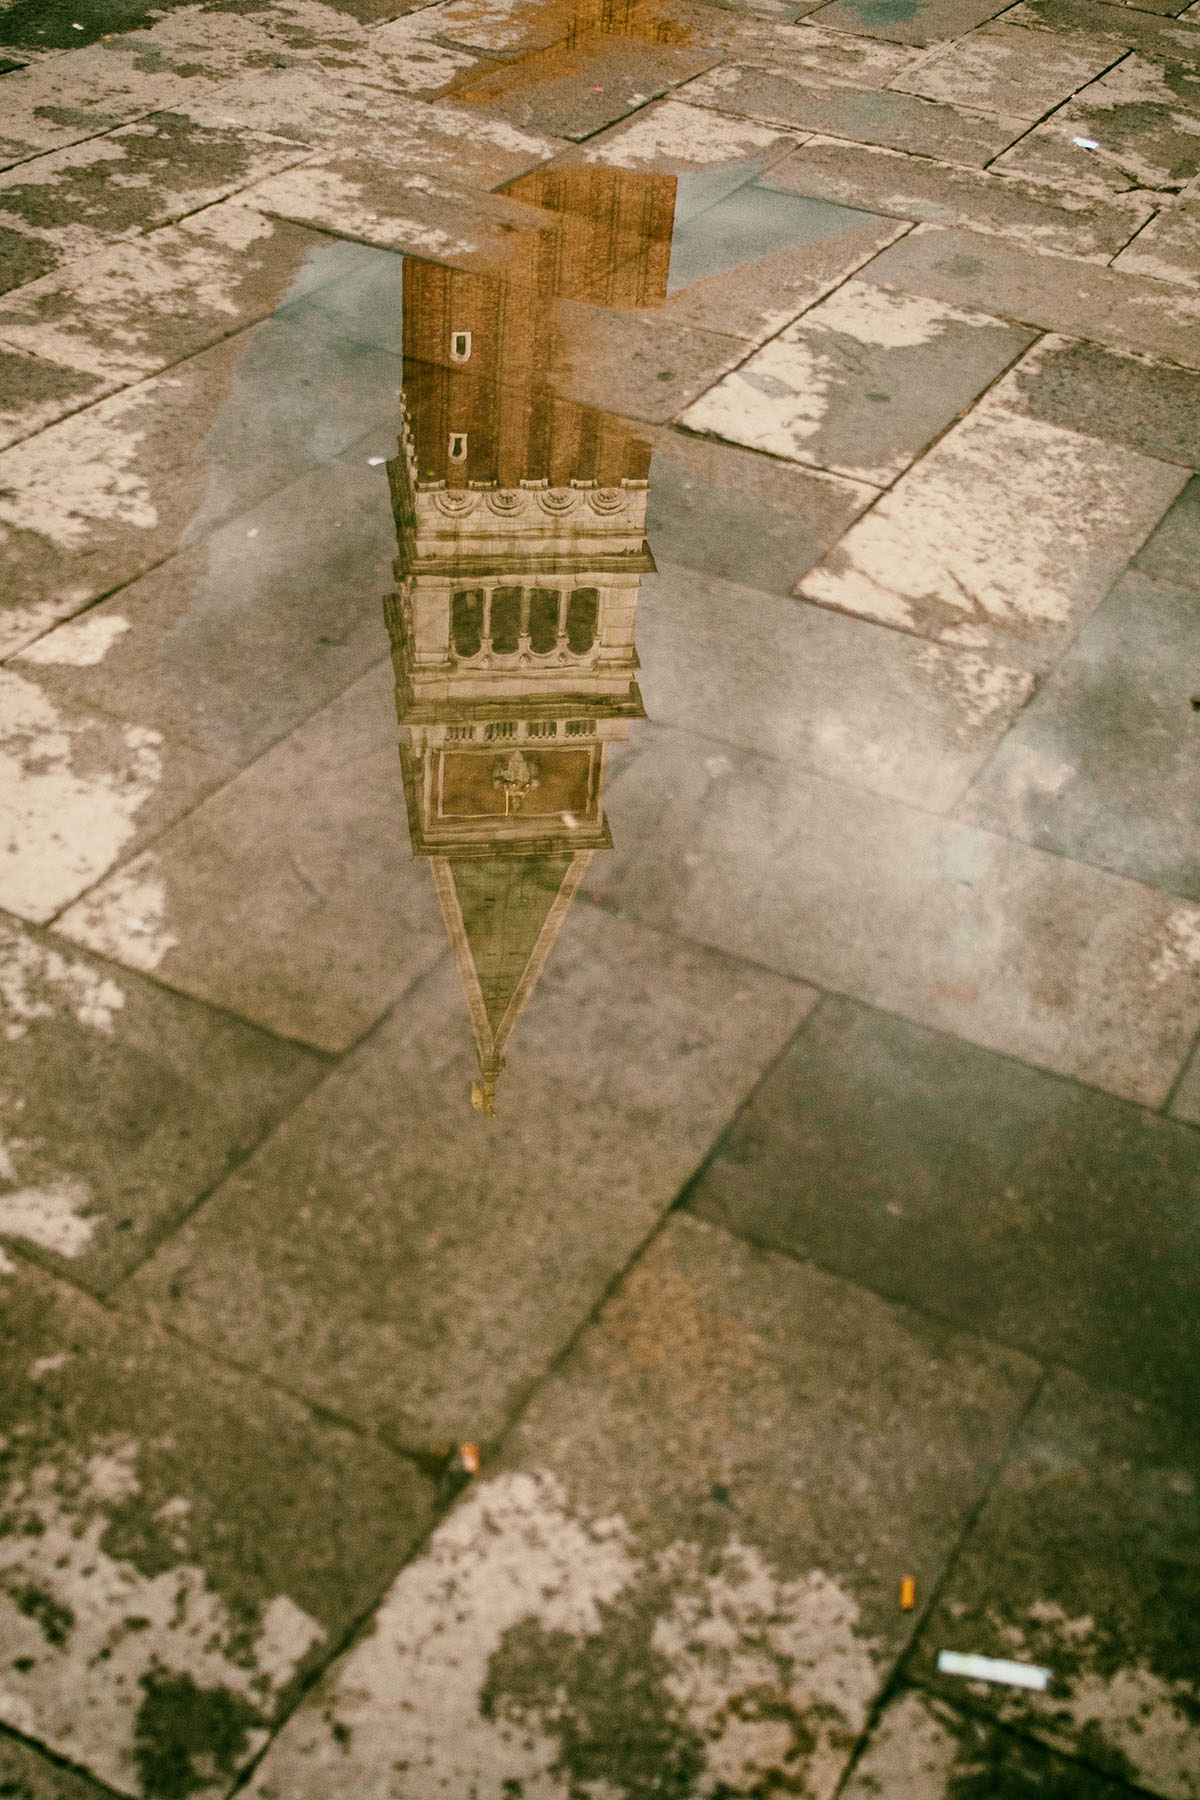 Venice venezia campanile lion san marco Piazza torre tower grey SKY